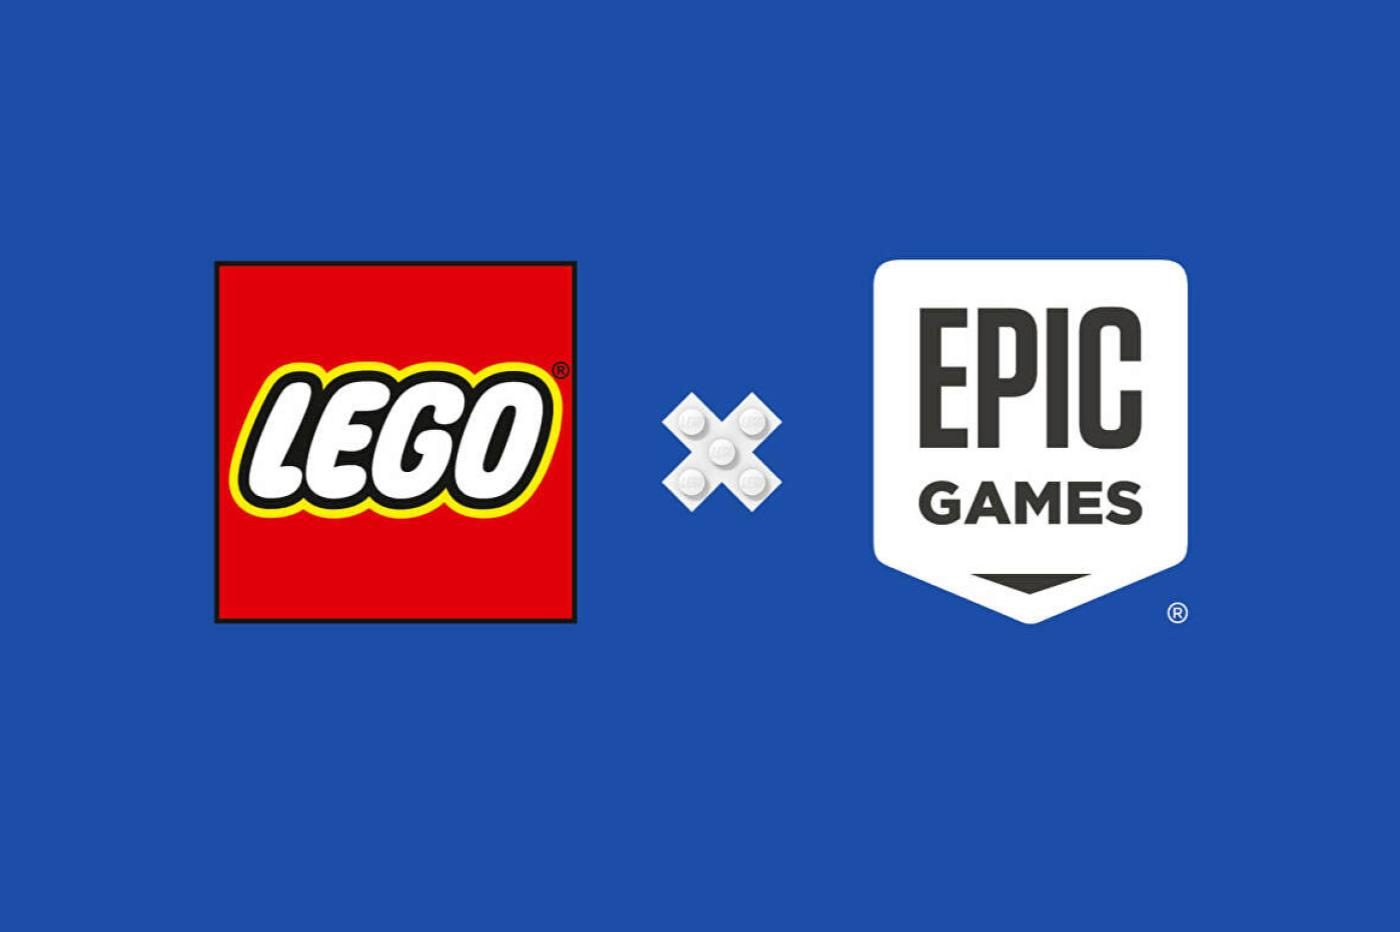 epic games lego partenariat